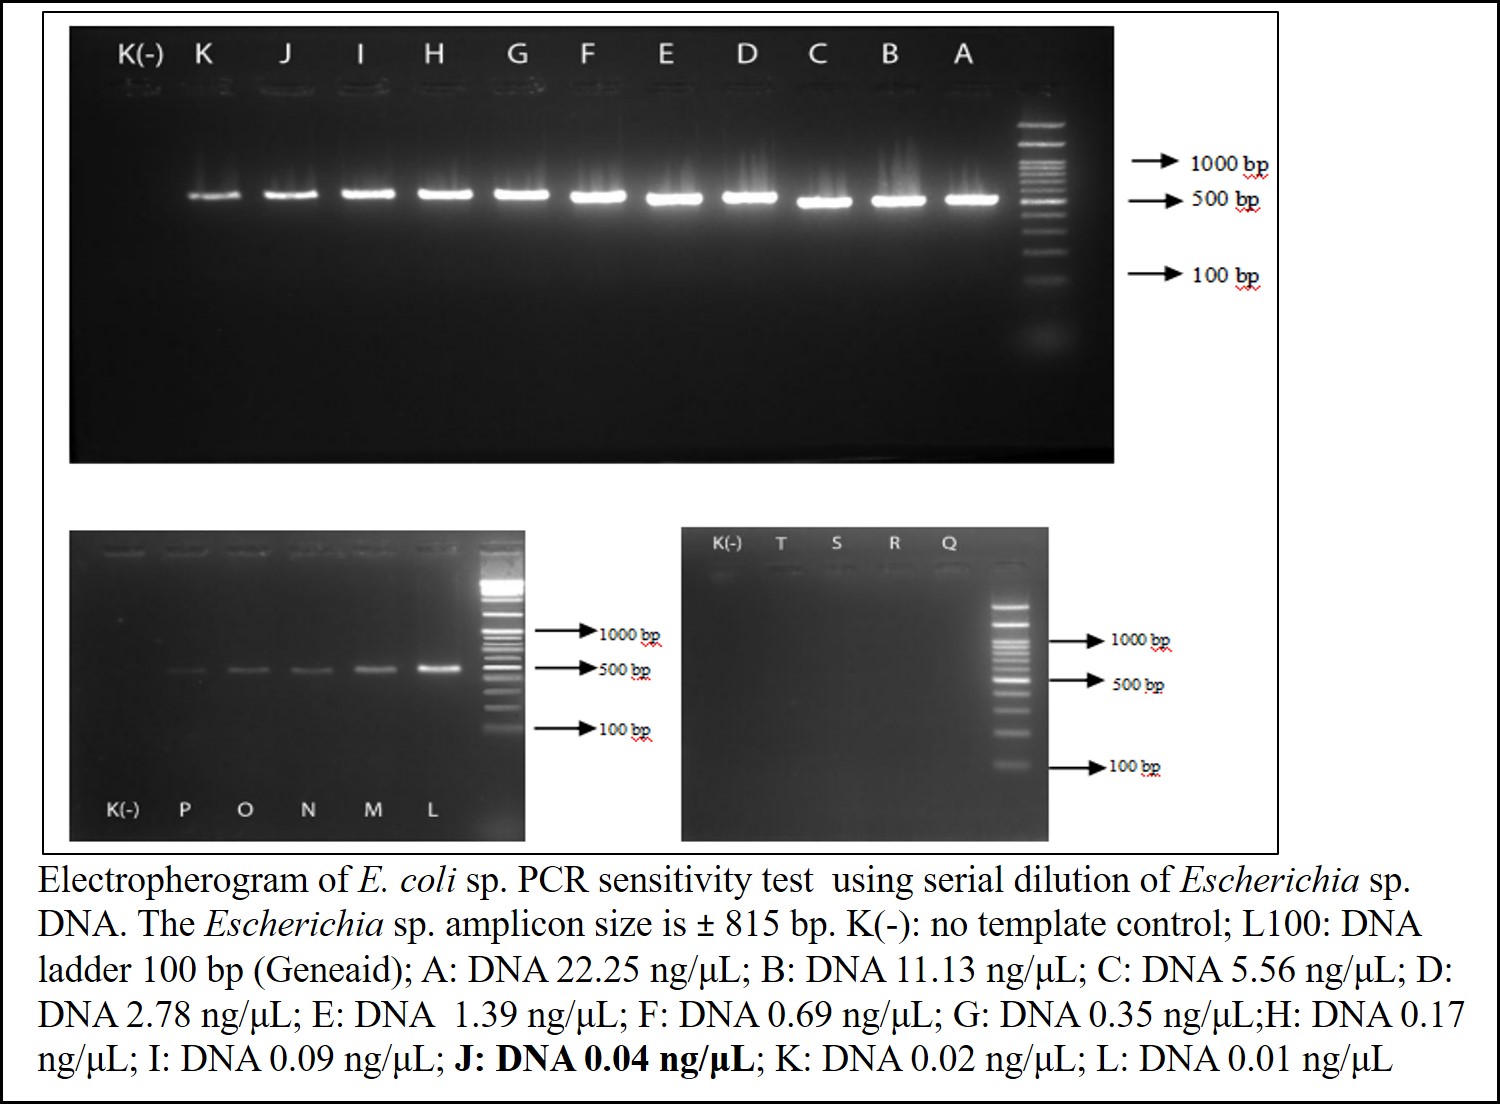 Electropherogram of E. coli sp. PCR sensitivity test  using serial dilution of Escherichia sp. DNA. The Escherichia sp. amplicon size is ± 815 bp. K(-): no template control; L100: DNA ladder 100 bp (Geneaid); A: DNA 22.25 ng/μL; B: DNA 11.13 ng/μL; C: DNA 5.56 ng/μL; D: DNA 2.78 ng/μL; E: DNA  1.39 ng/μL; F: DNA 0.69 ng/μL; G: DNA 0.35 ng/μL;H: DNA 0.17 ng/μL; I: DNA 0.09 ng/μL; J: DNA 0.04 ng/μL; K: DNA 0.02 ng/μL; L: DNA 0.01 ng/μL